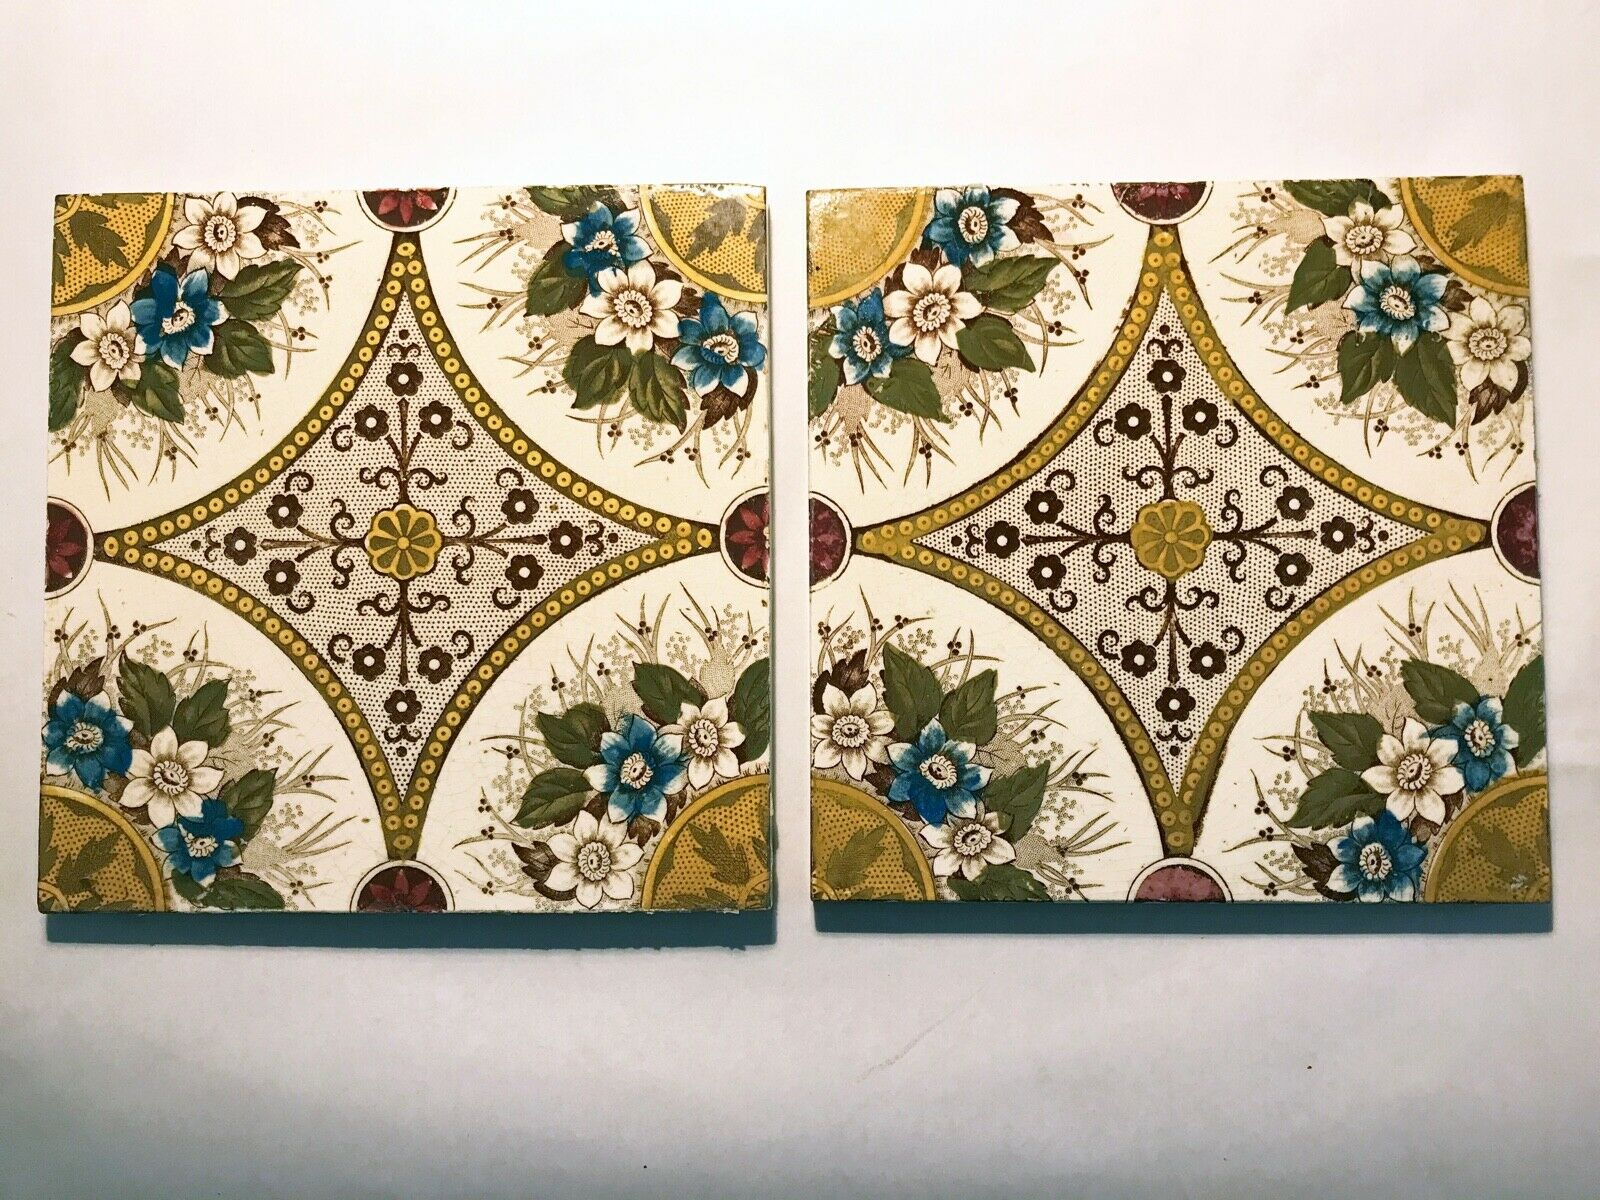 Vintage Antique Transfer Printed Floral Design Tiles x 2, Design E555 c.1800s?